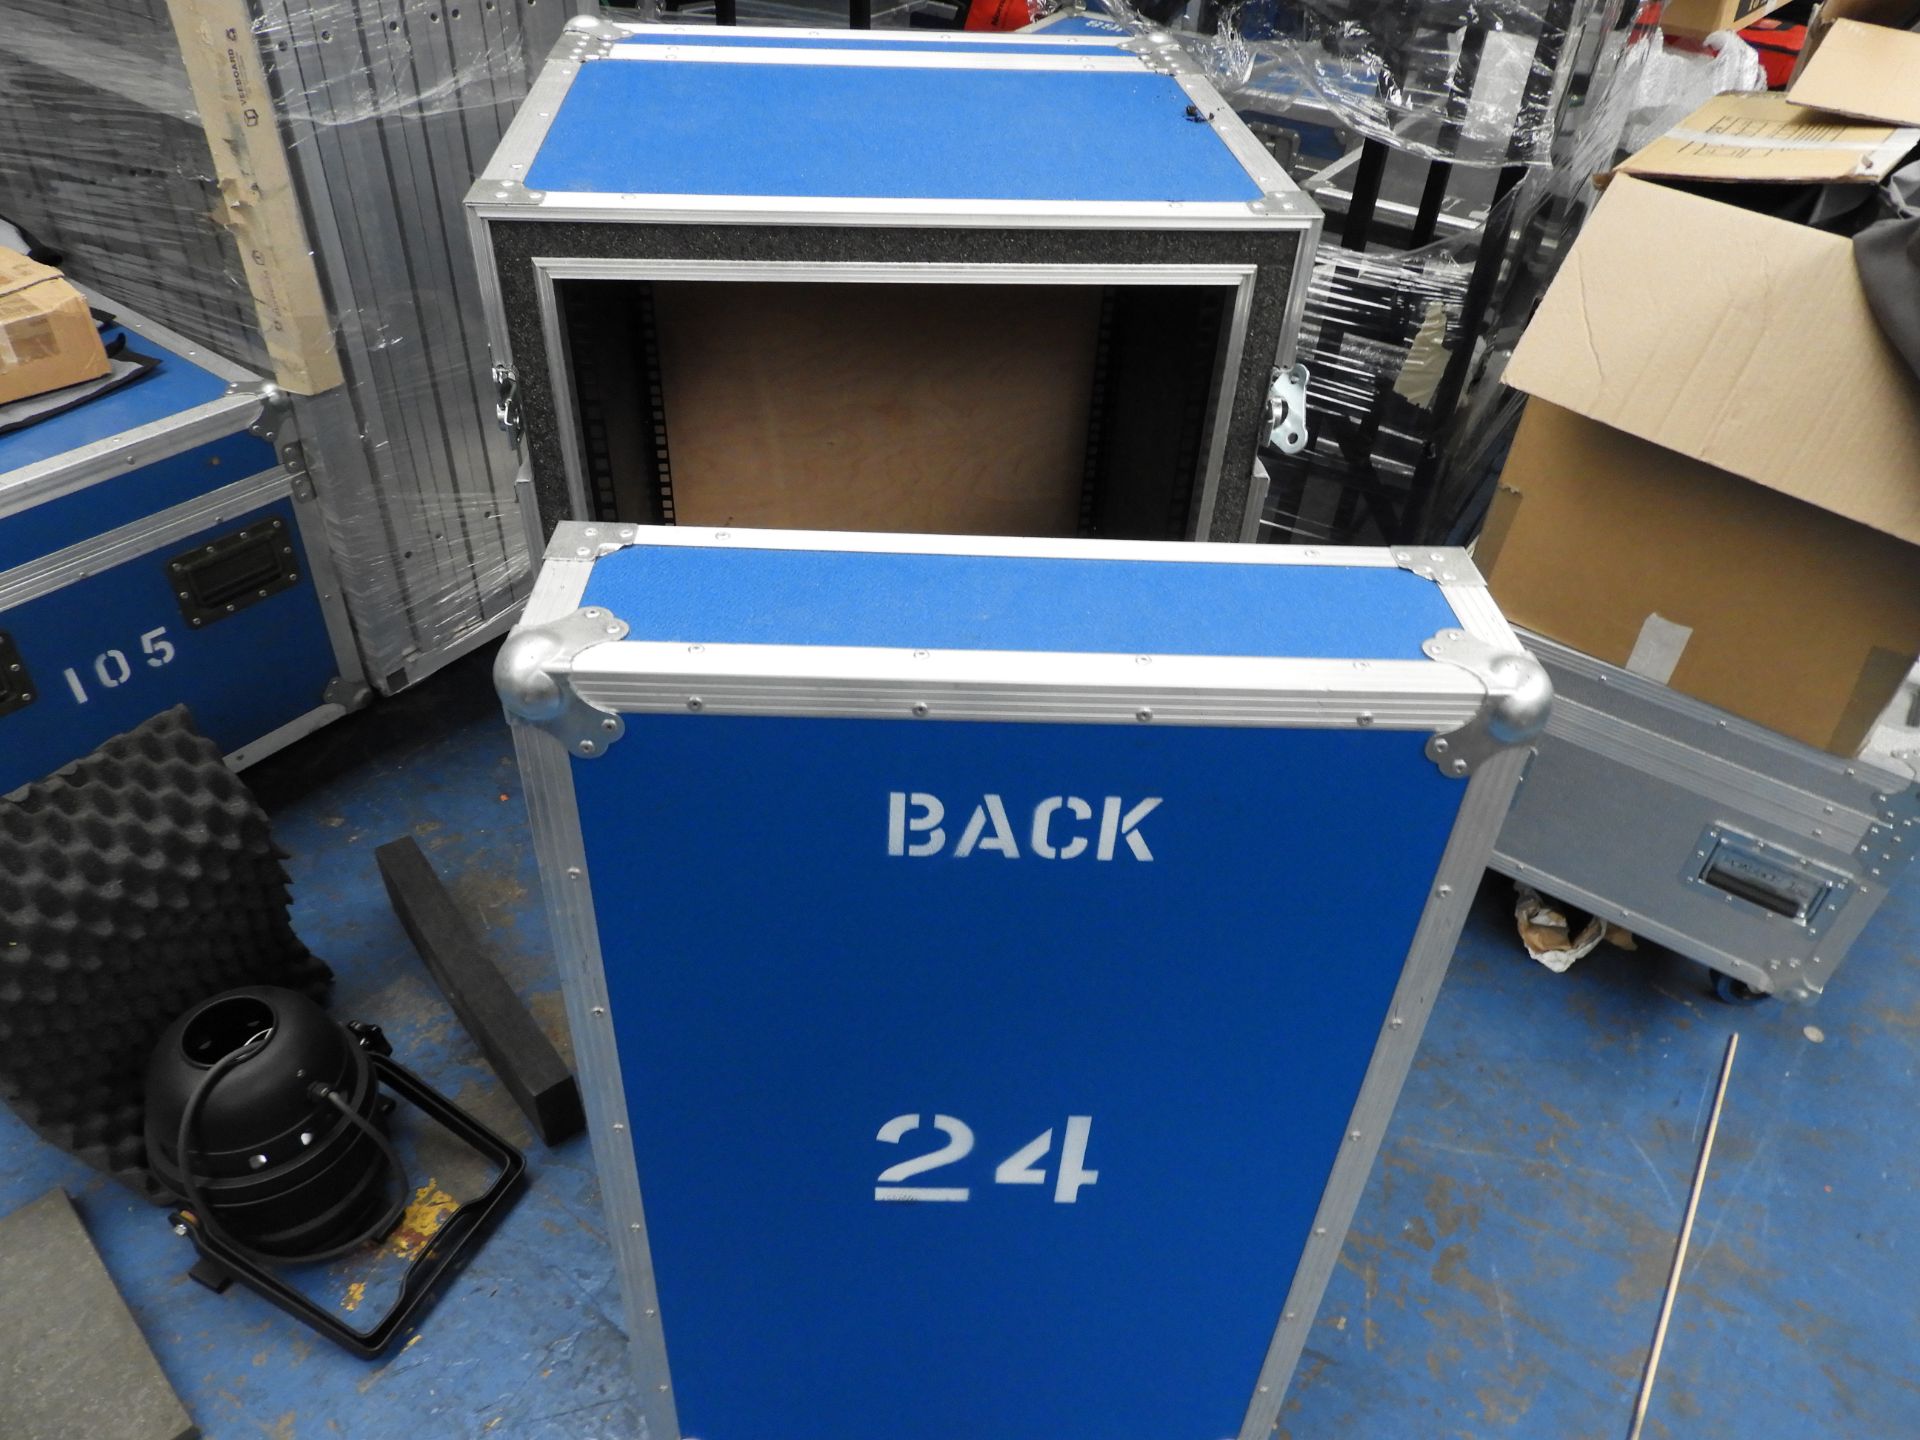 Blue 15 unit rack flight case on wheels